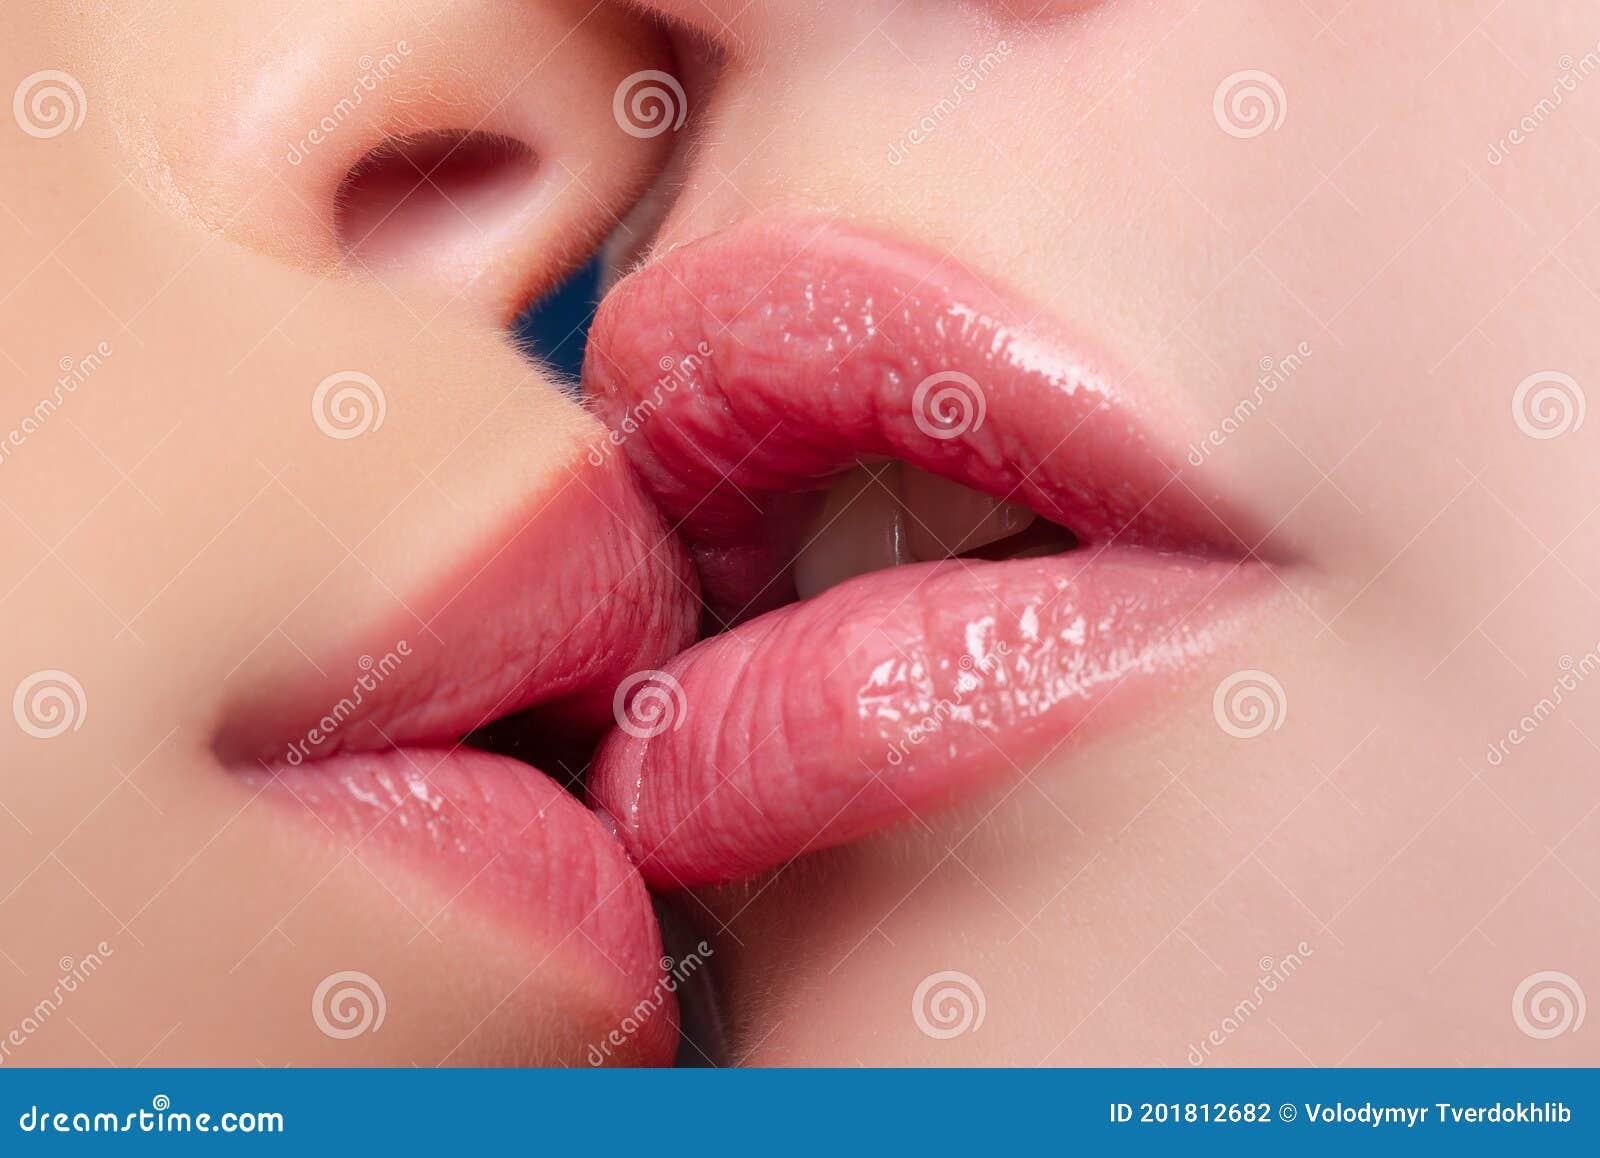 ahmad abo ali recommends lesbian kissing sensual pic